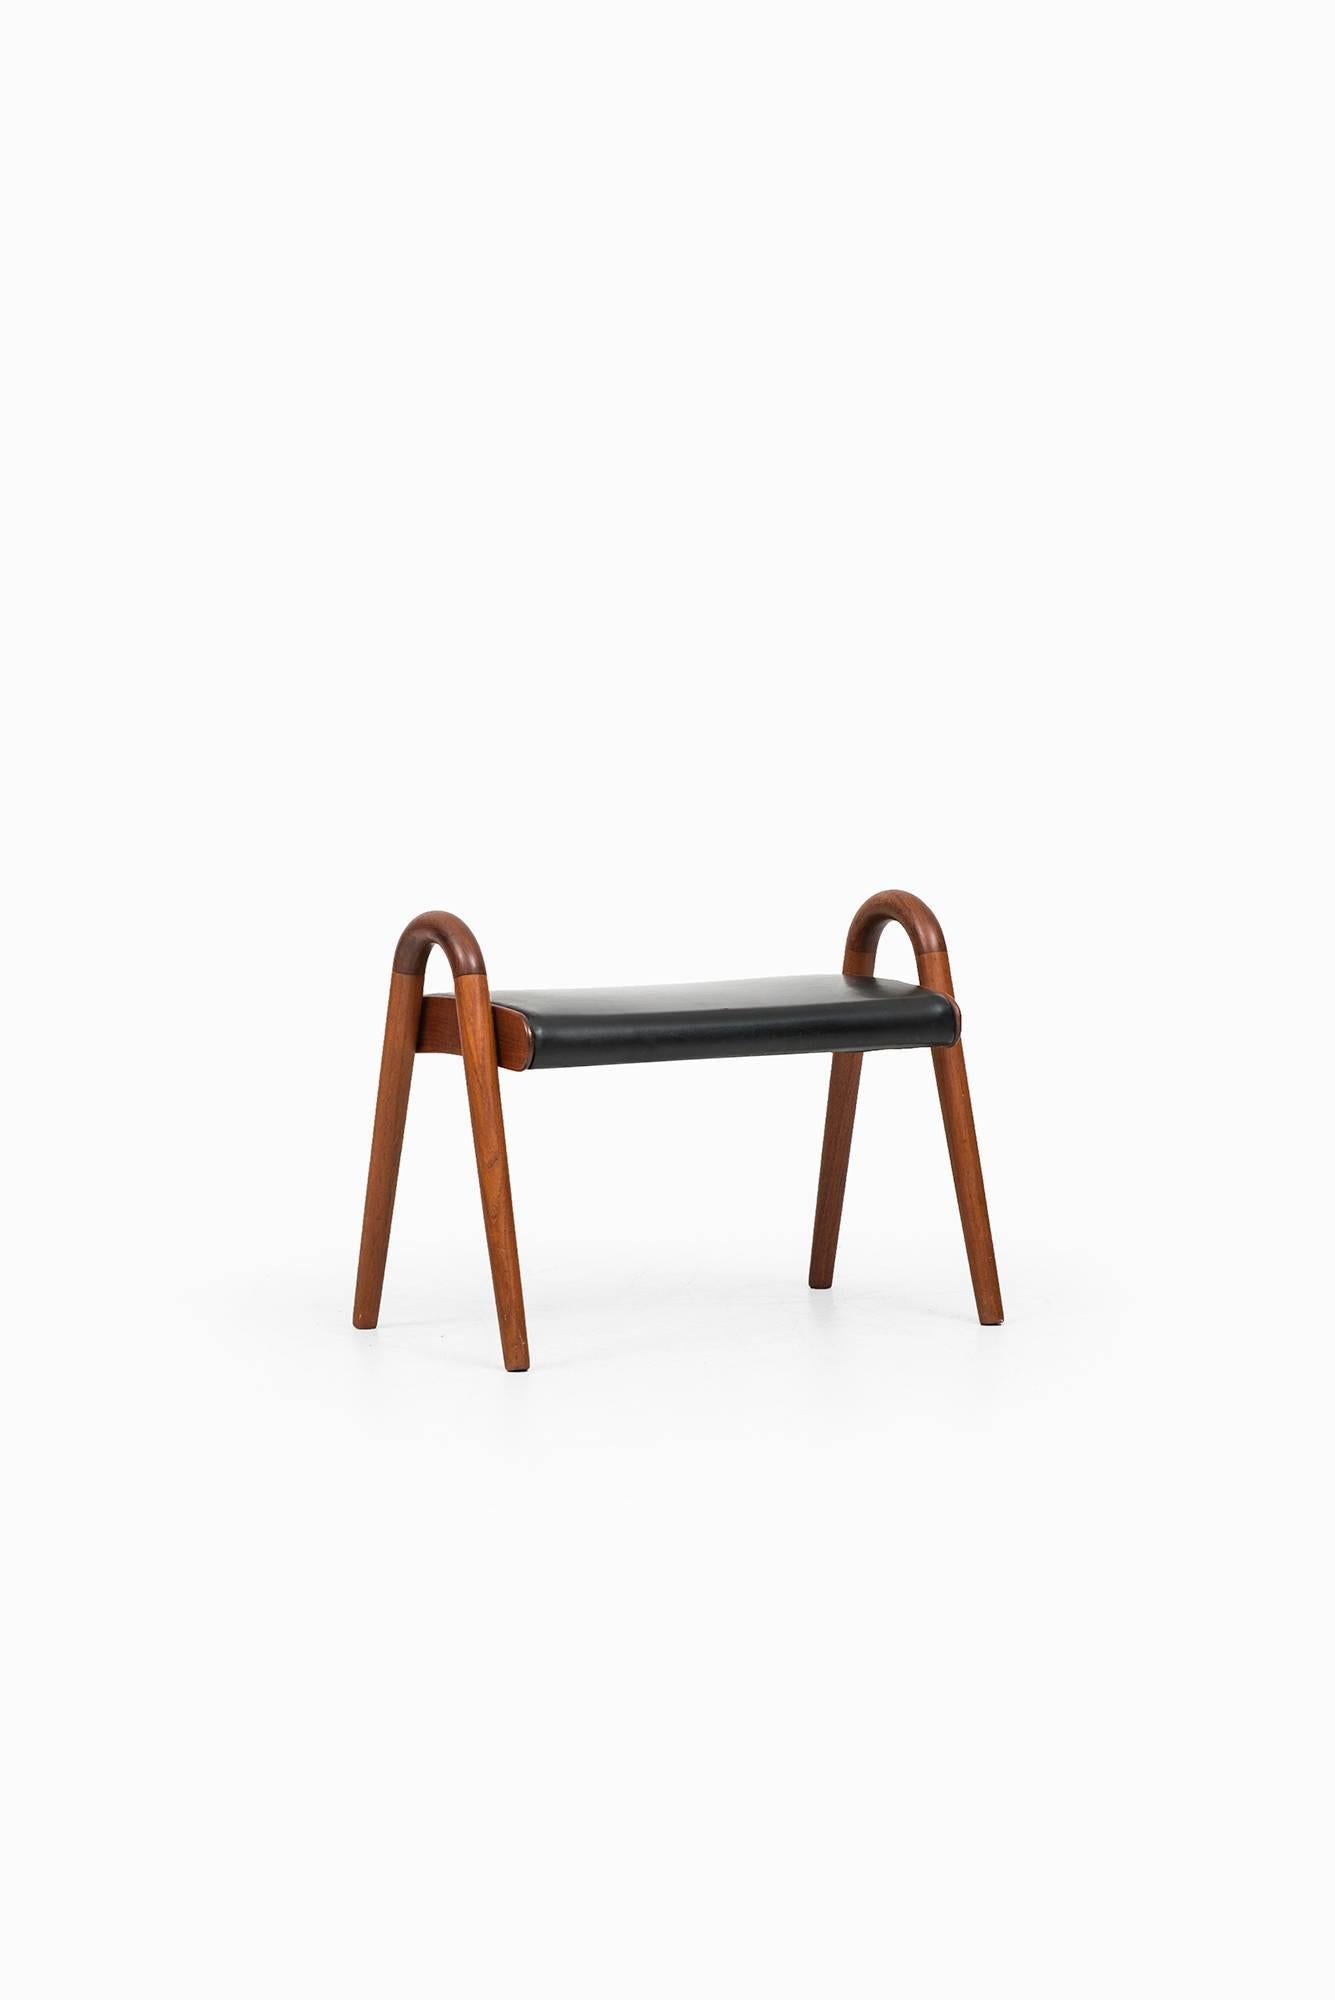 Rare stool designed by Vilhelm Lauritzen. Produced by Fritz Hansen in Denmark.